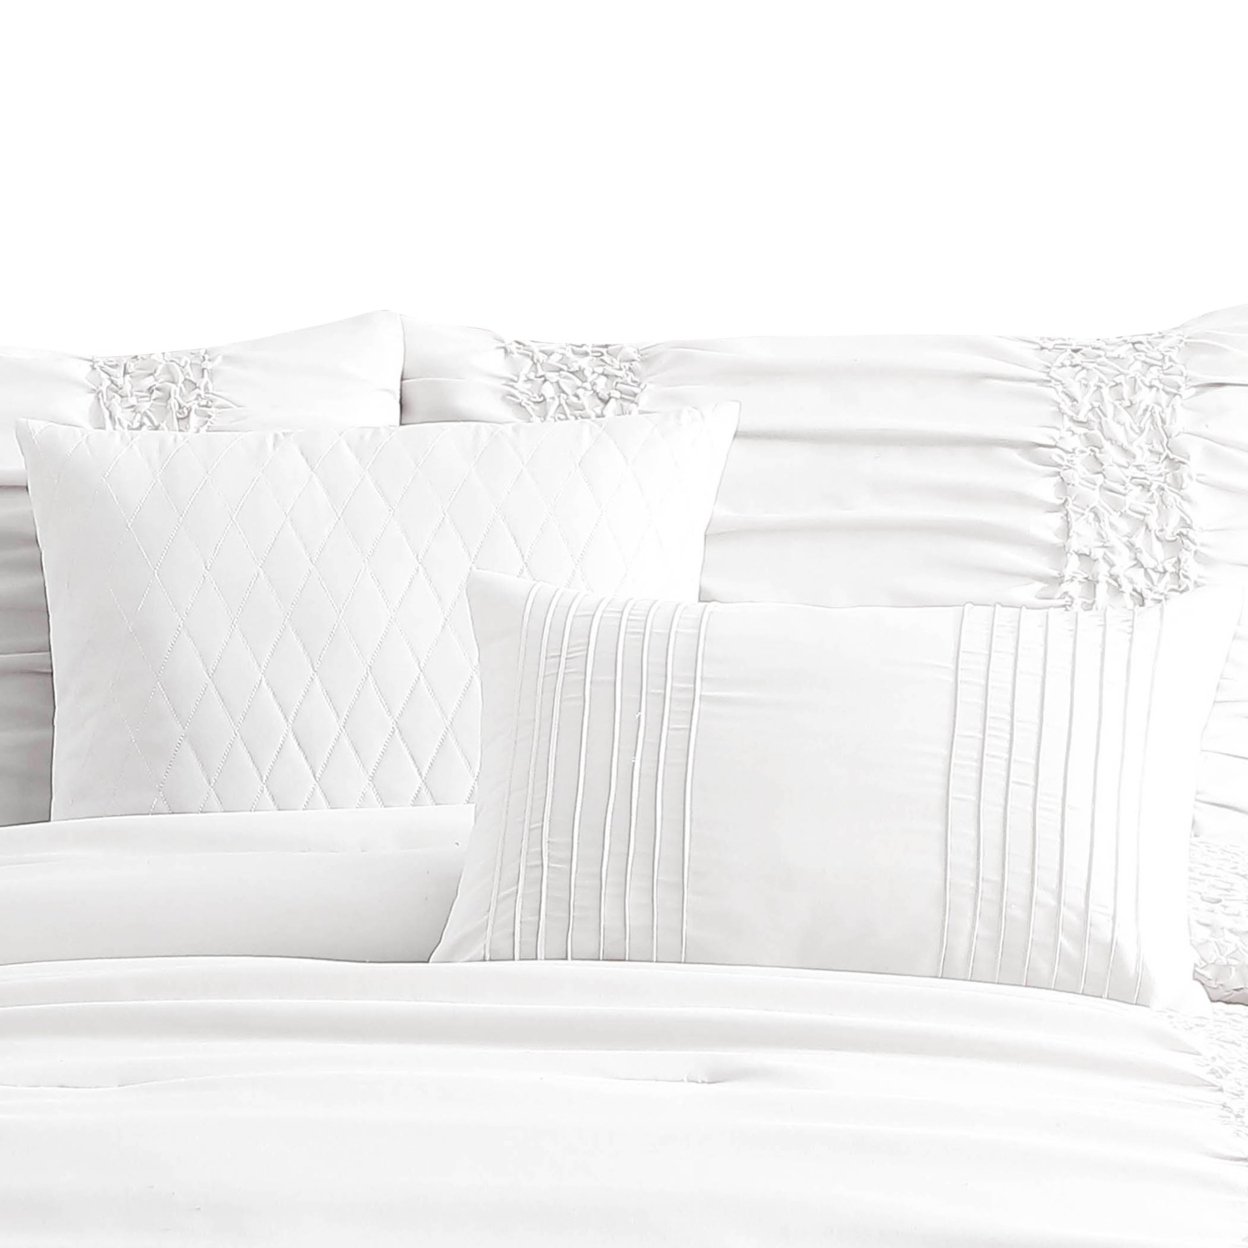 4 Piece Twin Comforter Set With Ruching Details, White- Saltoro Sherpi